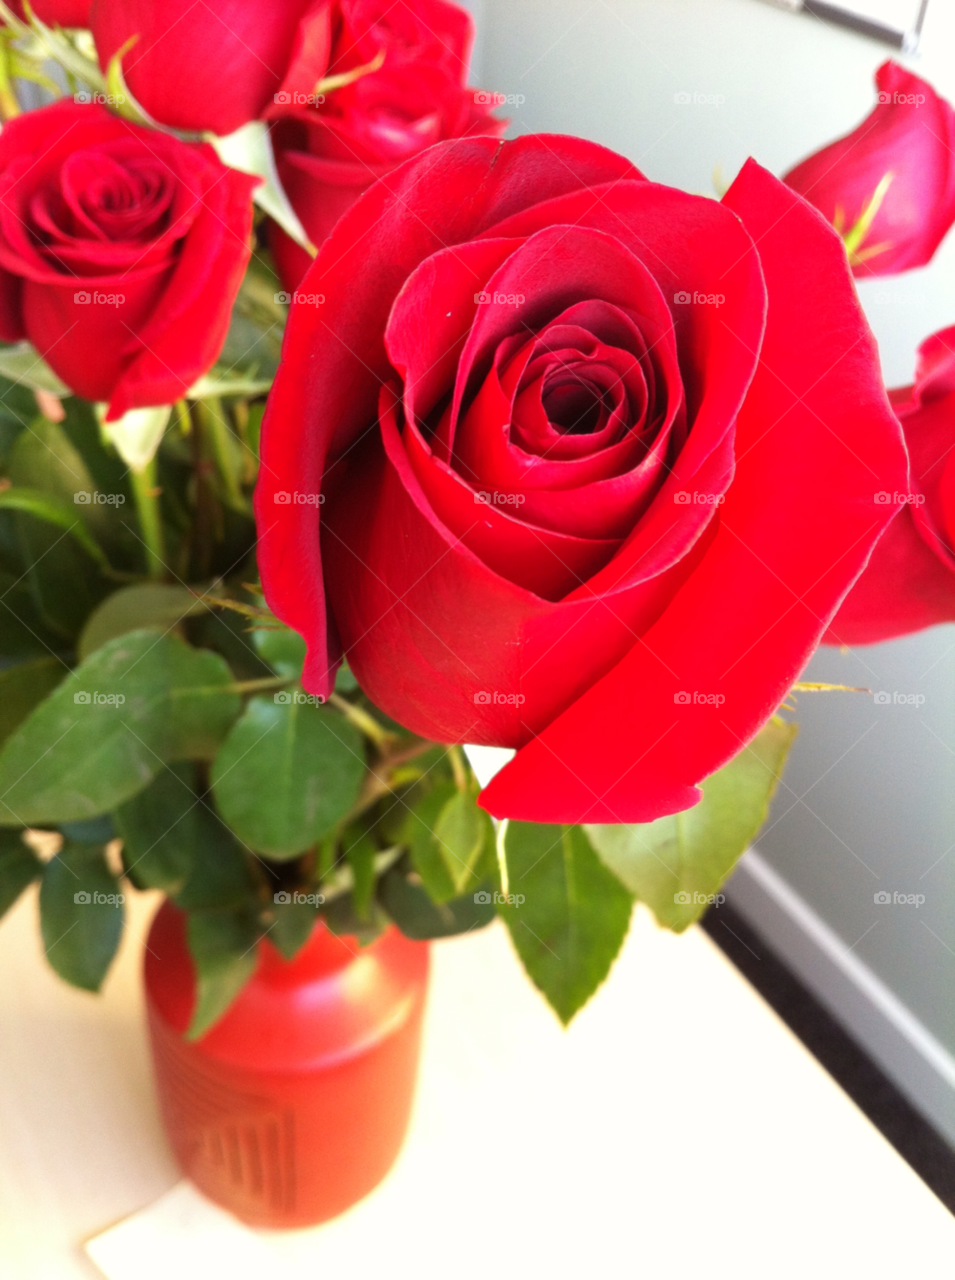 flowers red romance romantic by kar1981